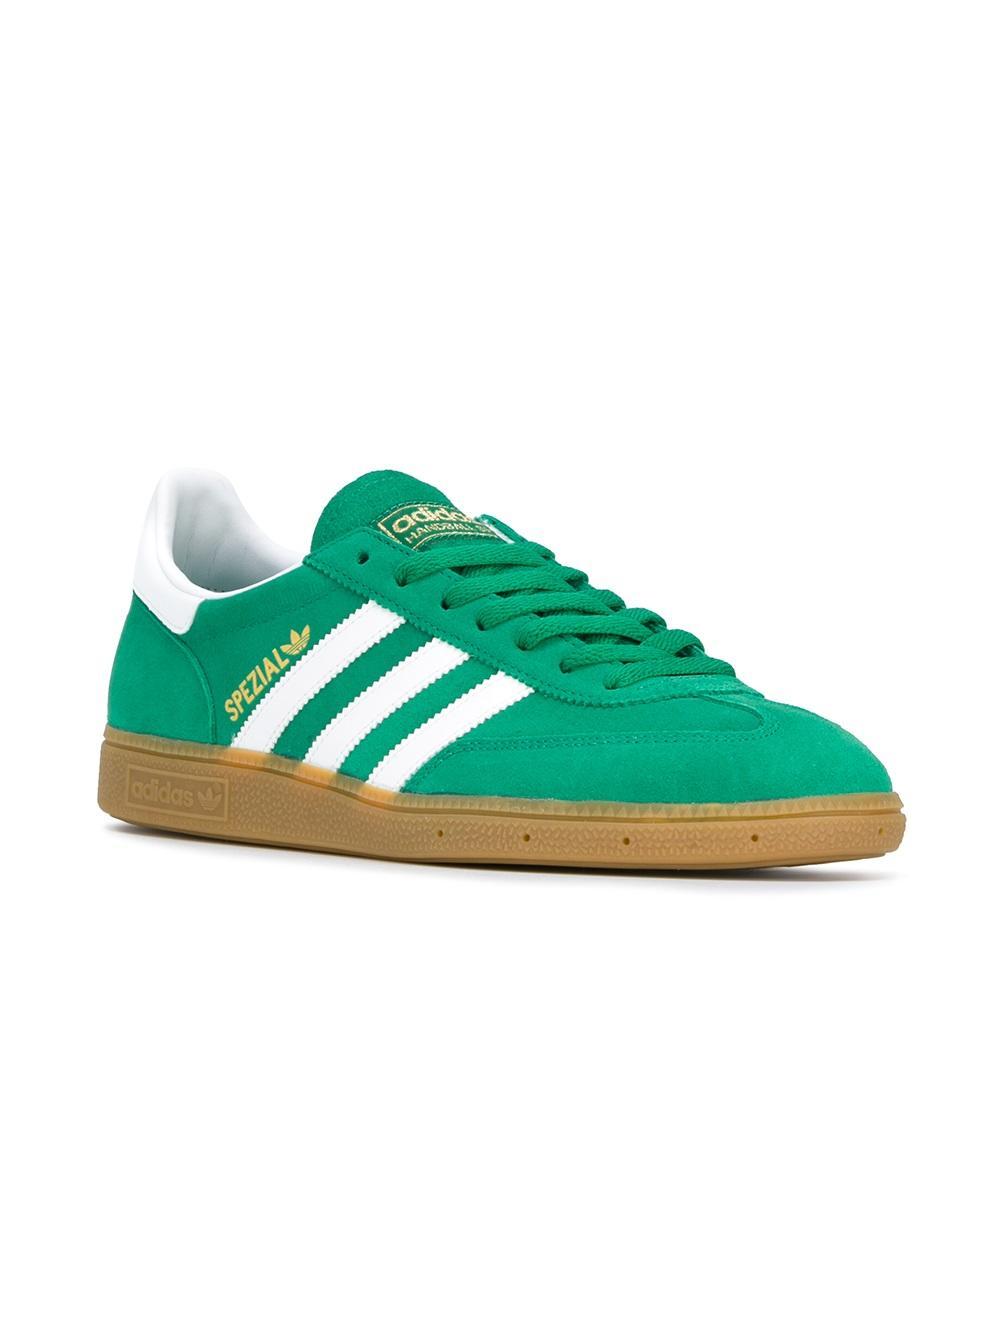 adidas Originals Leather 'handball Spezial' Sneakers in Green for Men - Lyst